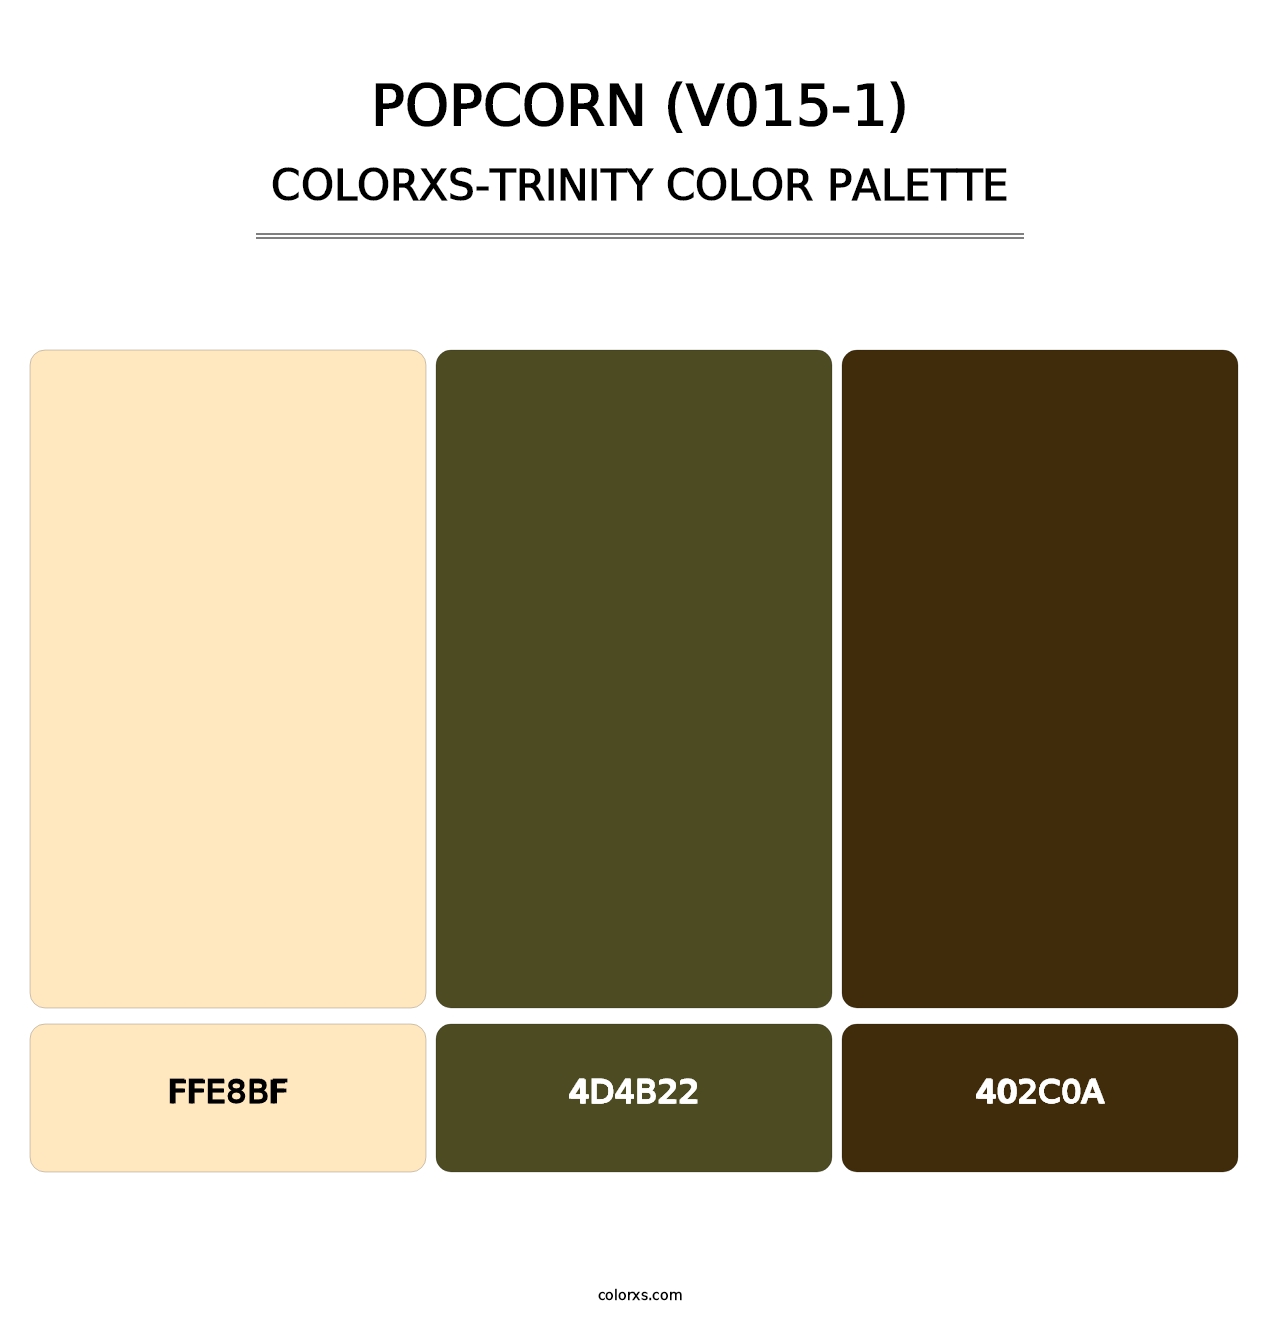 Popcorn (V015-1) - Colorxs Trinity Palette